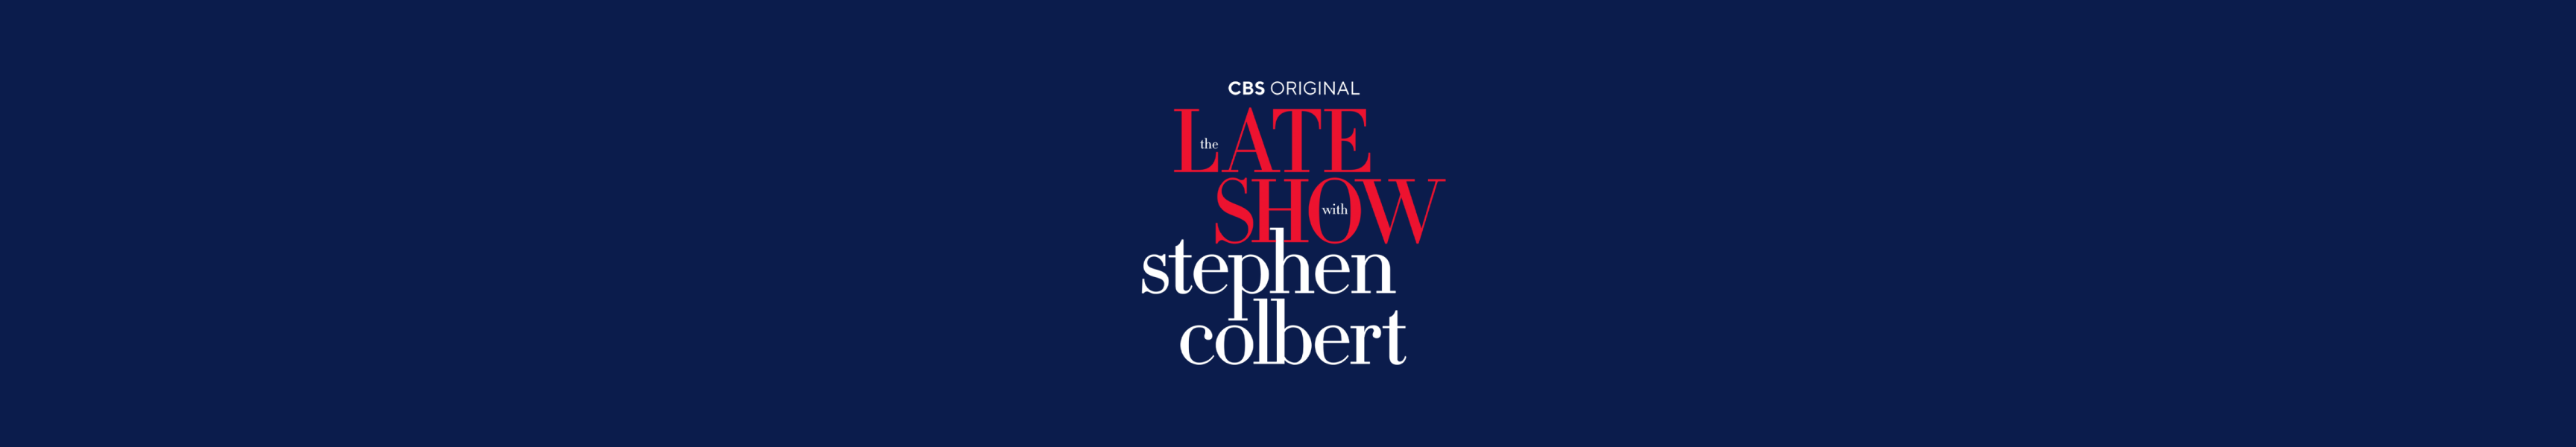 Late Show mit Stephen Colbert